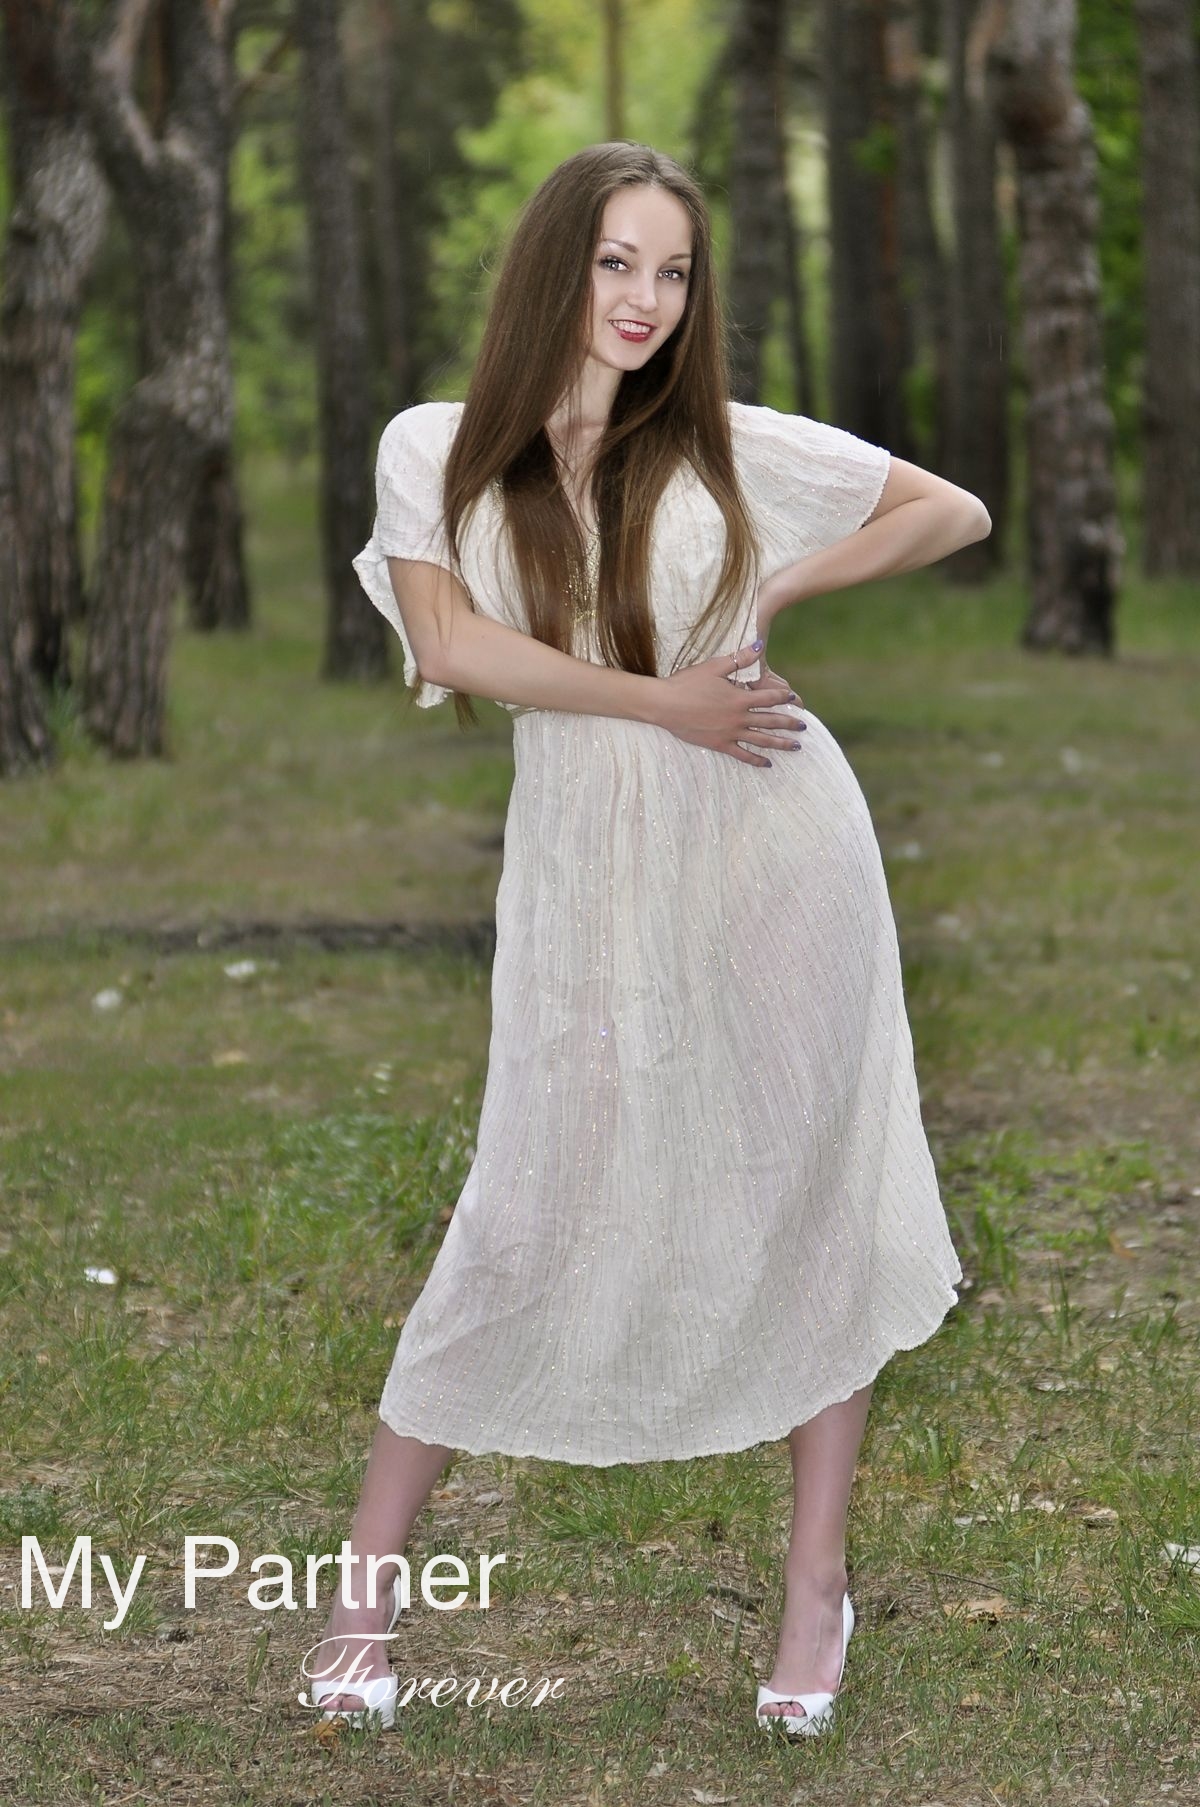 Dating Service to Meet Charming Ukrainian Girl Anna from Kiev, Ukraine